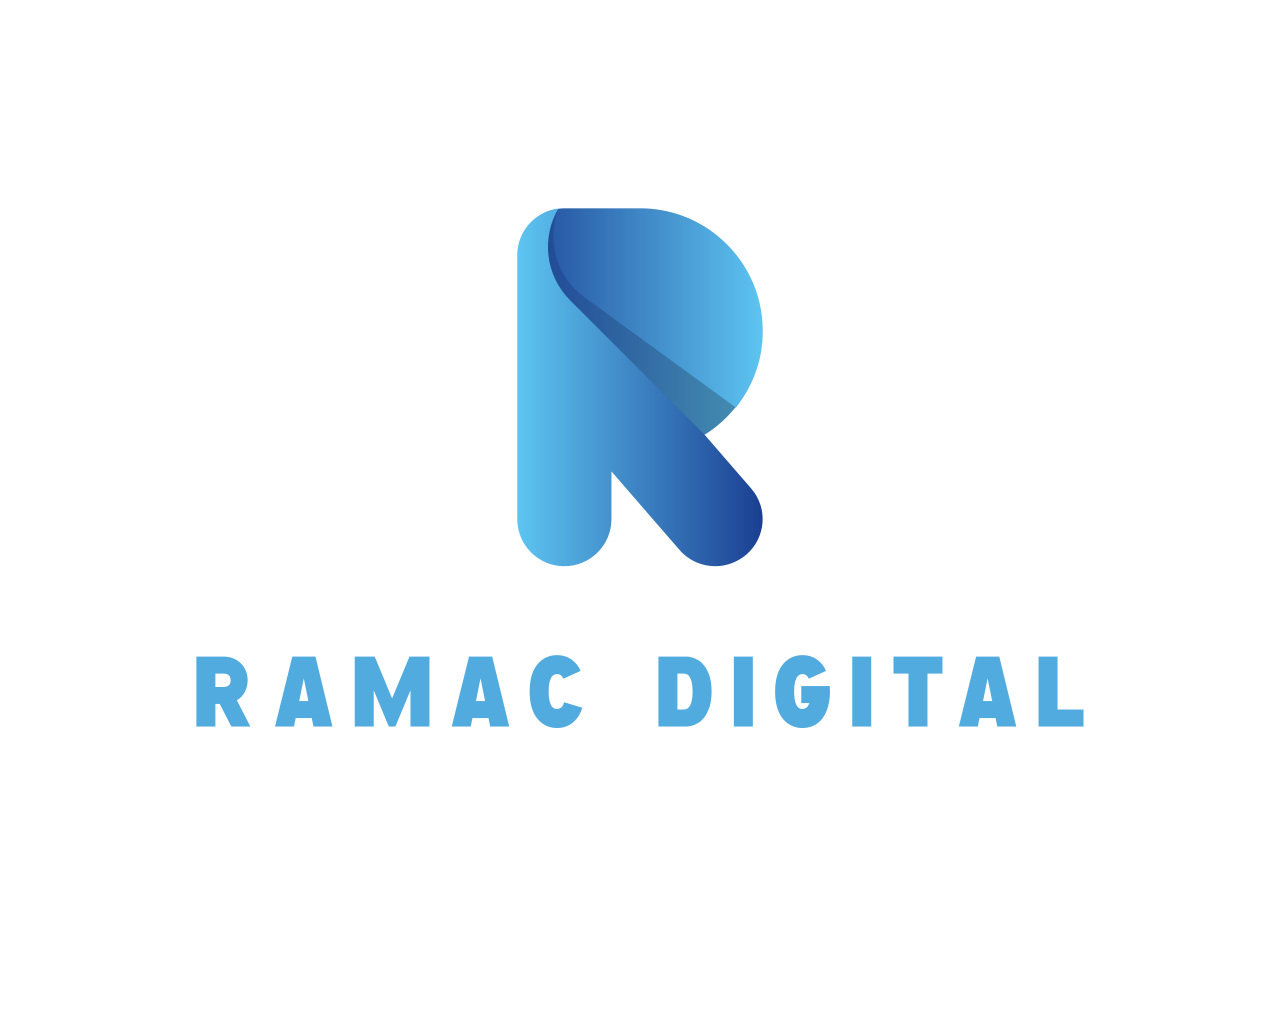 Ramac digital